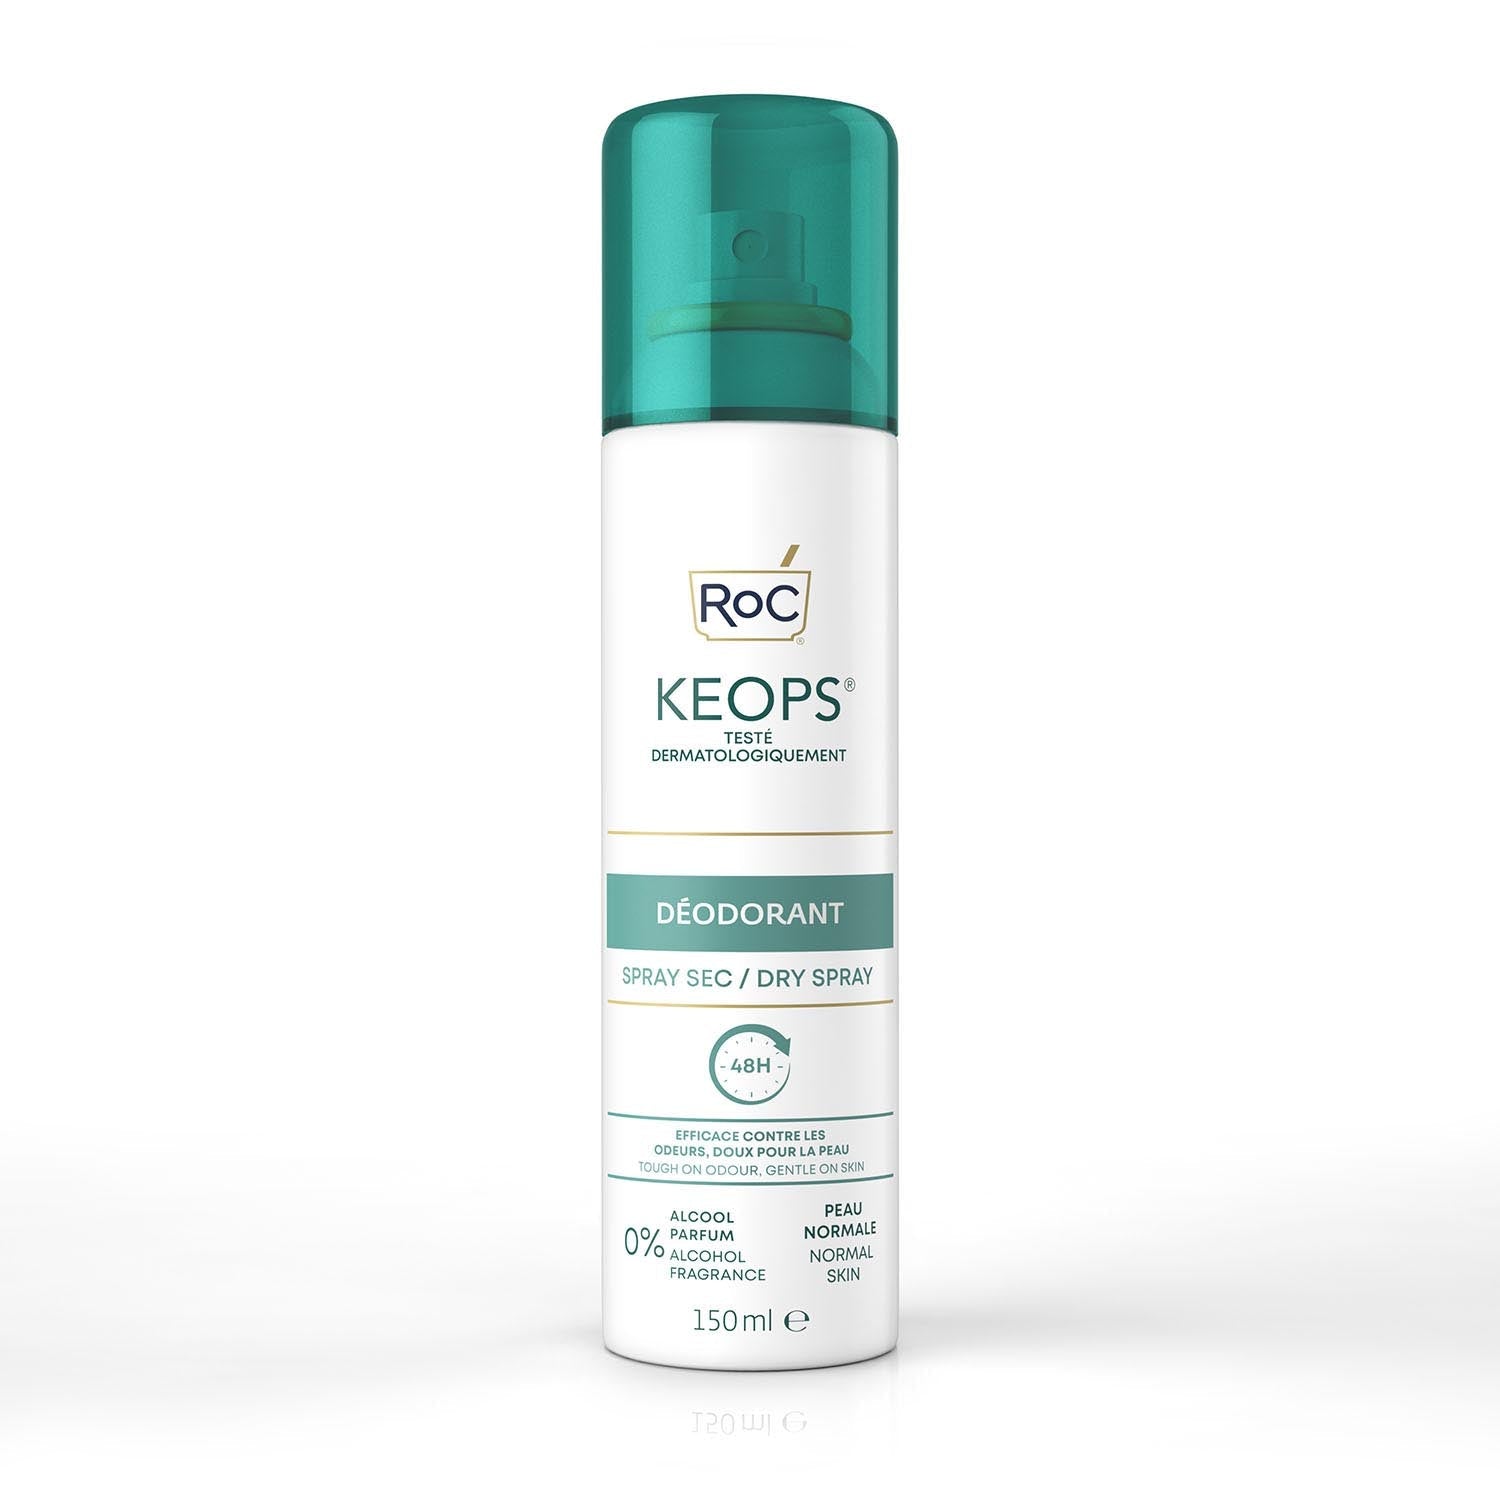 Keops - Déodorant spray sec 48h